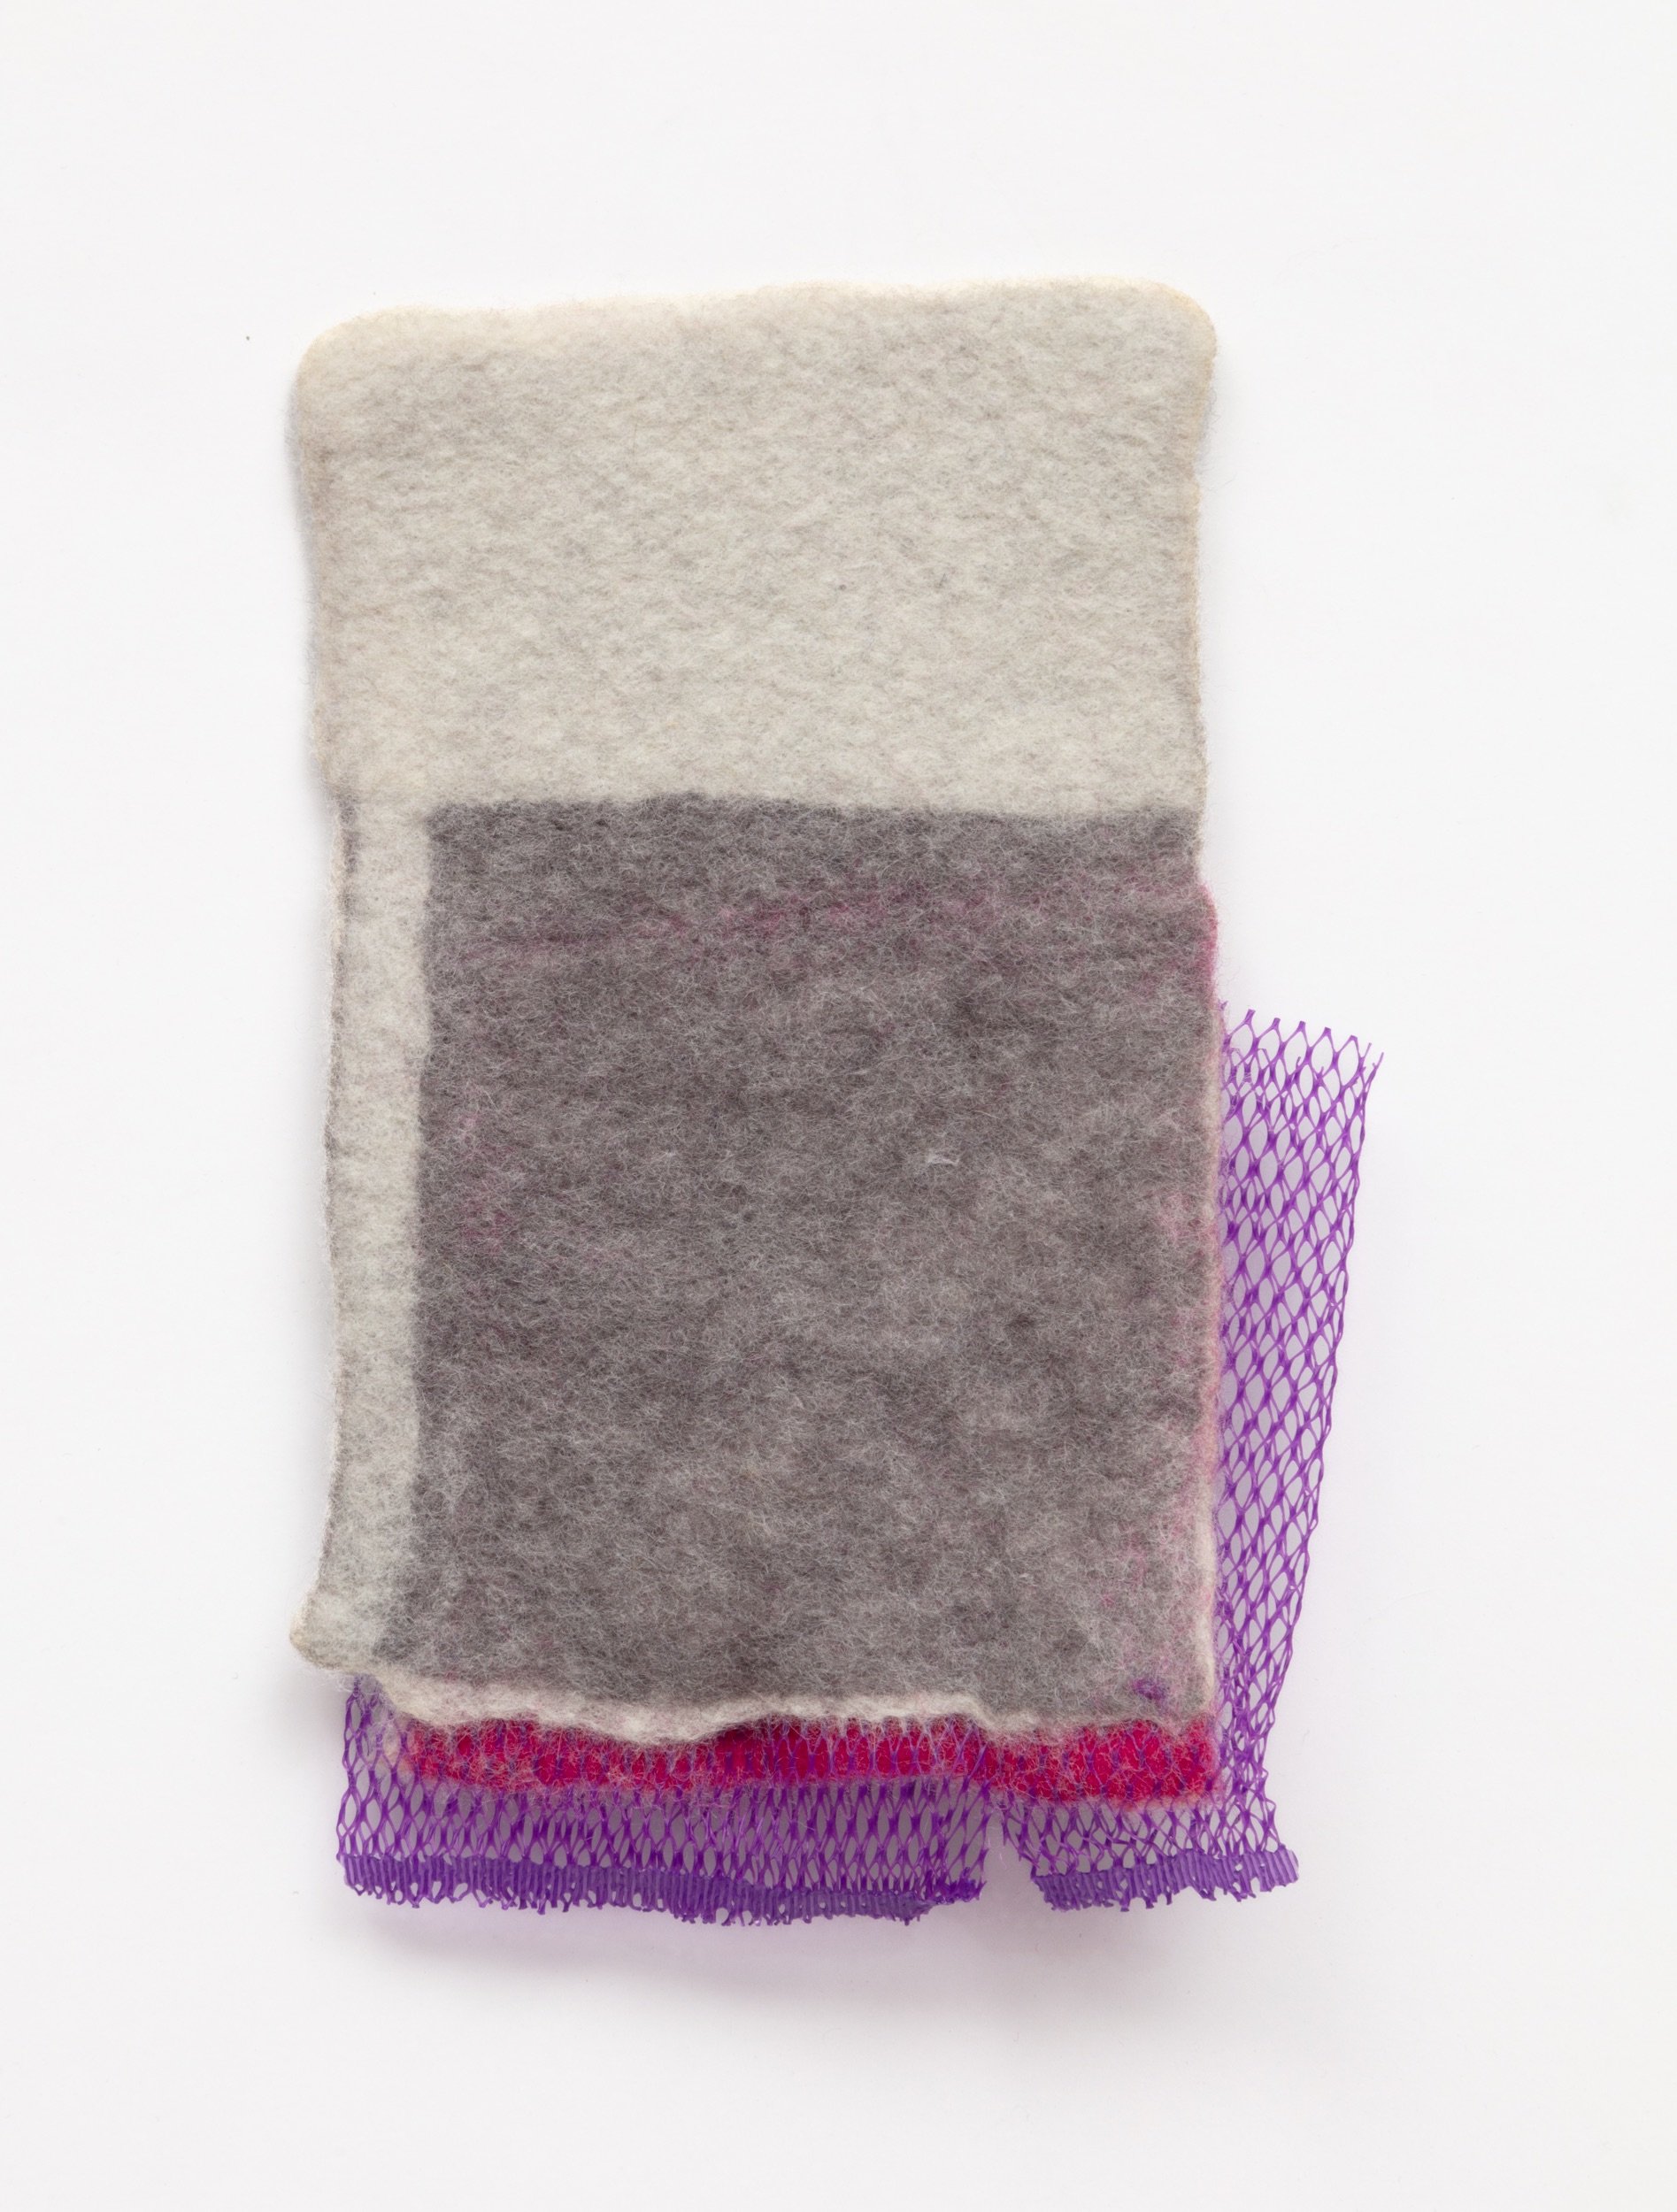  Untitled, 2021 (back)  Handfelted merino wool, plastic produce net 